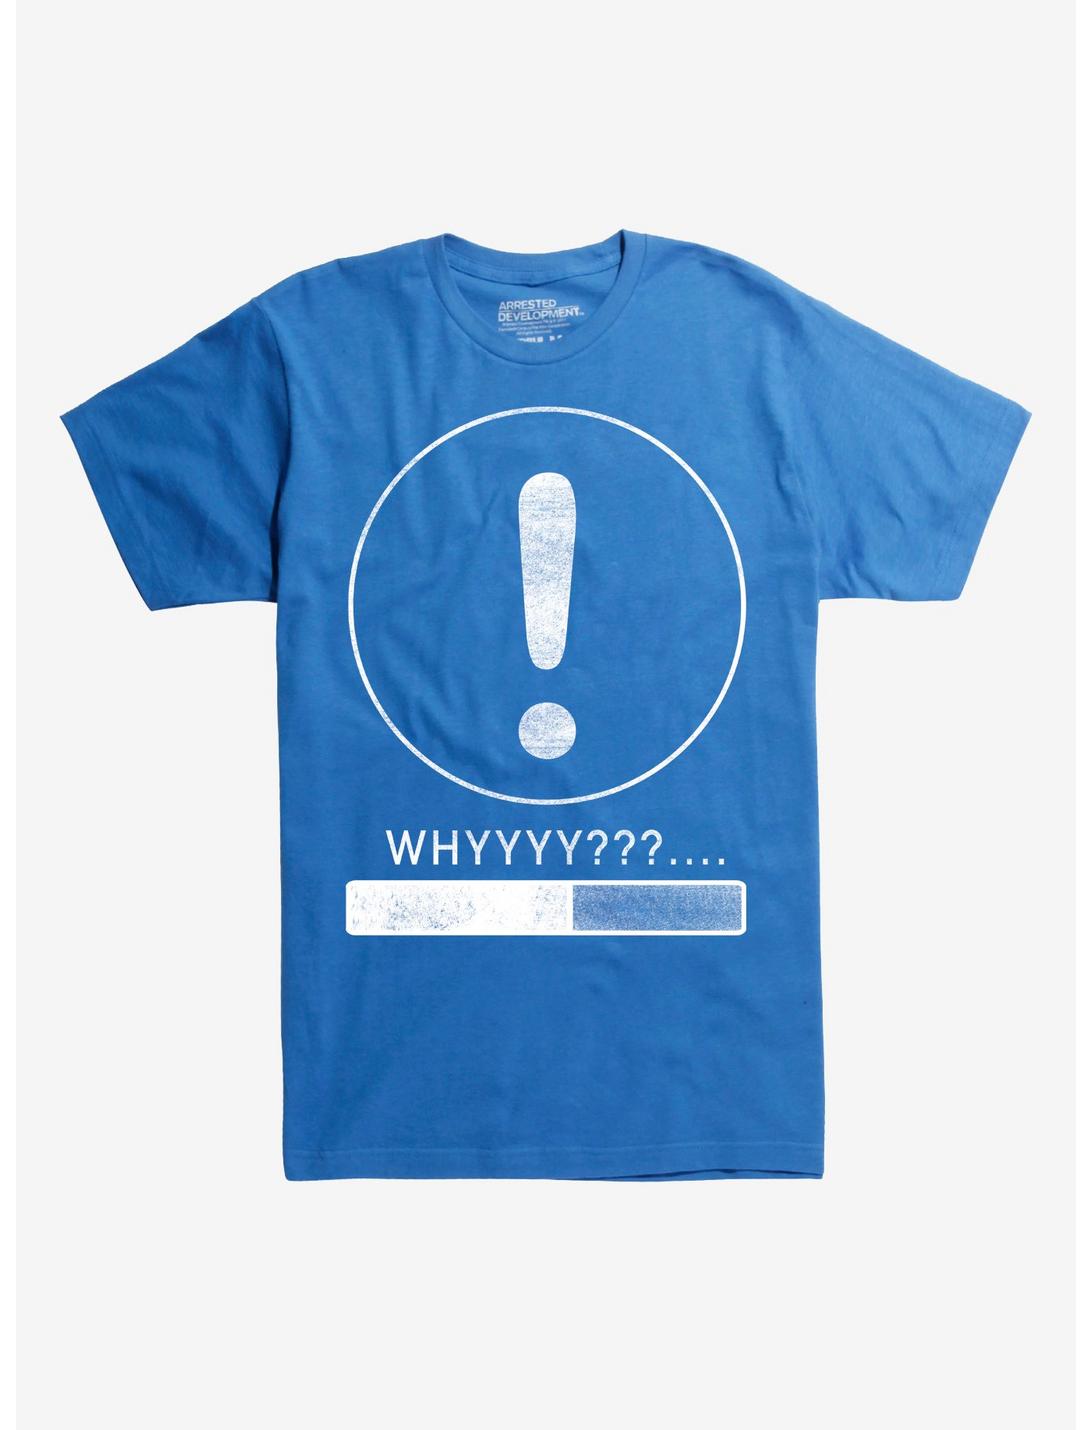 Whyyyy??? Loading T-Shirt, ROYAL BLUE, hi-res